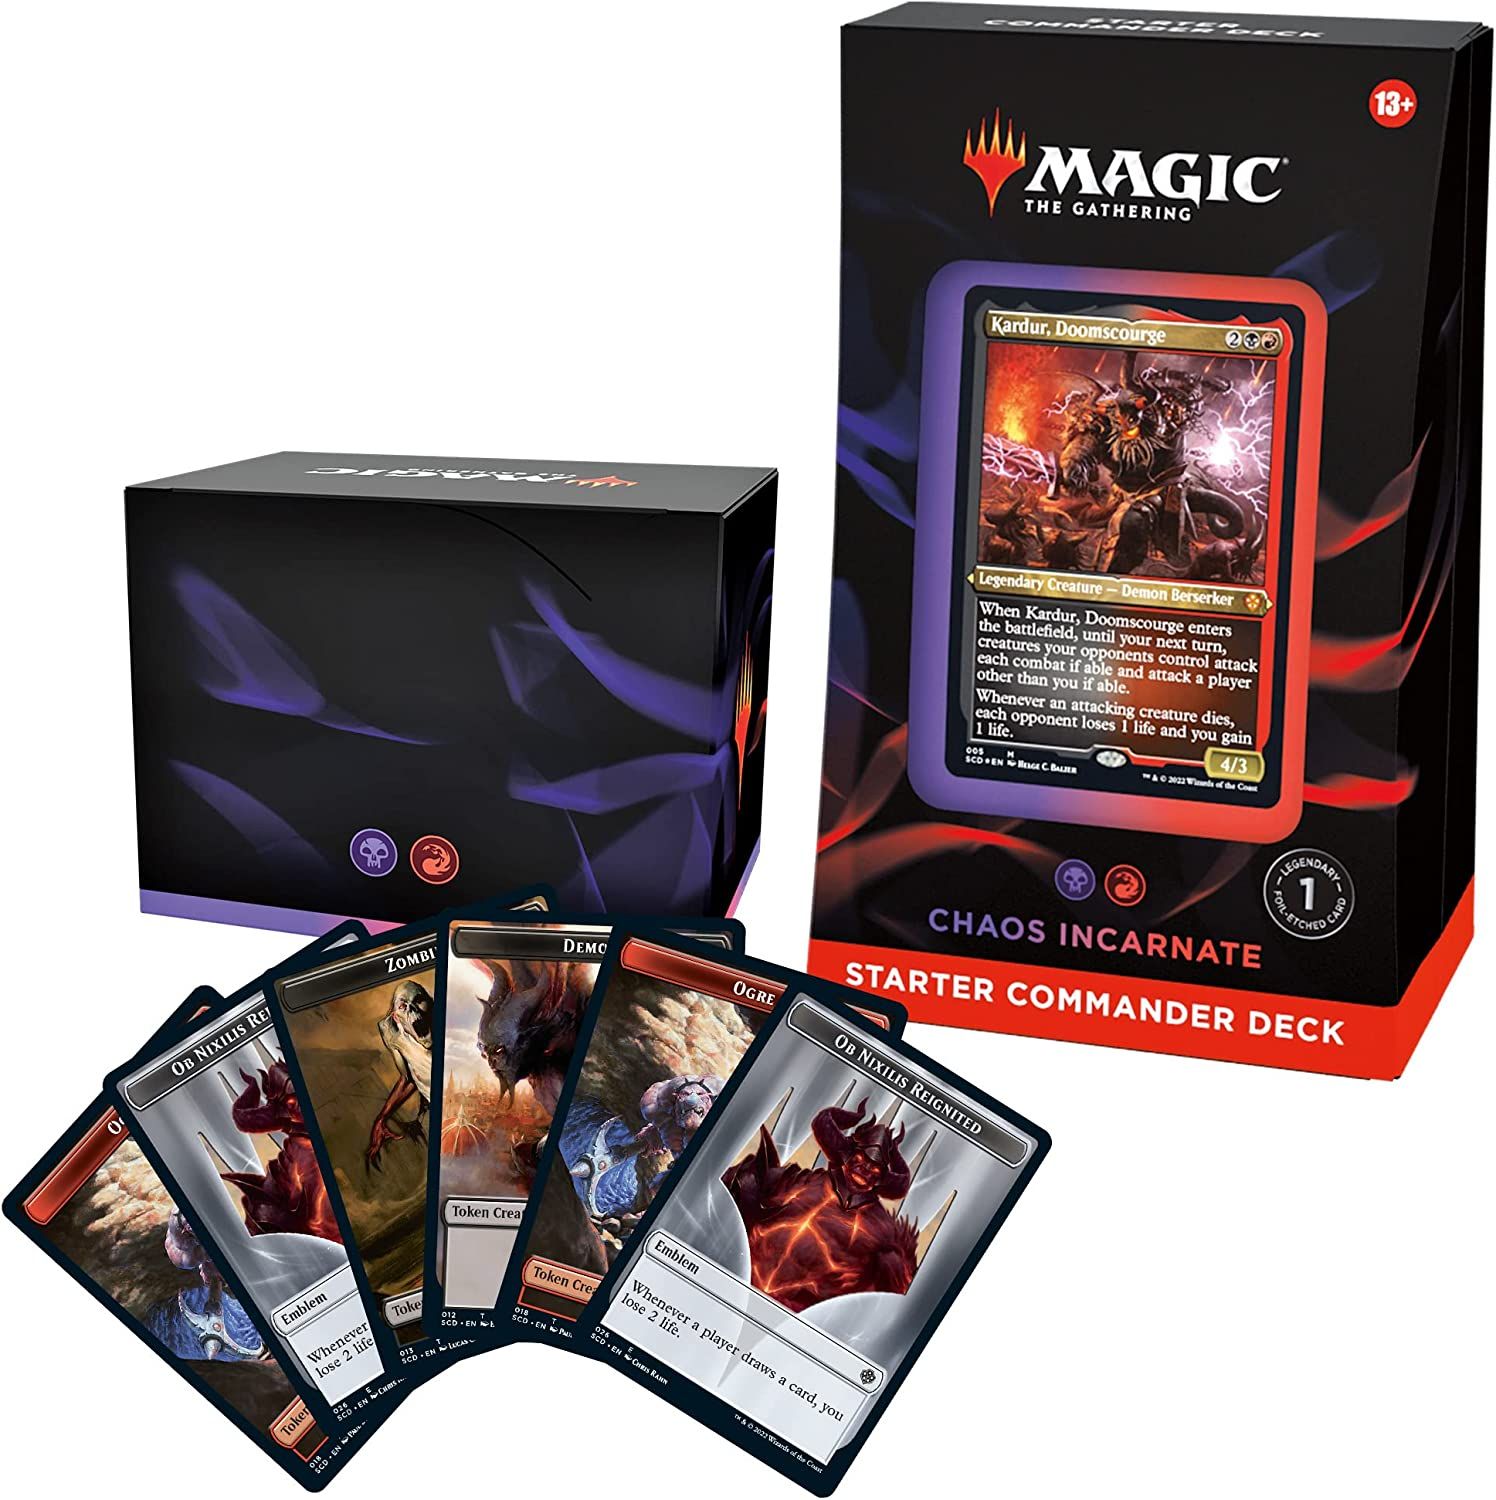 Magic The Gathering Starter Commander Deck – Chaos Incarnate 1